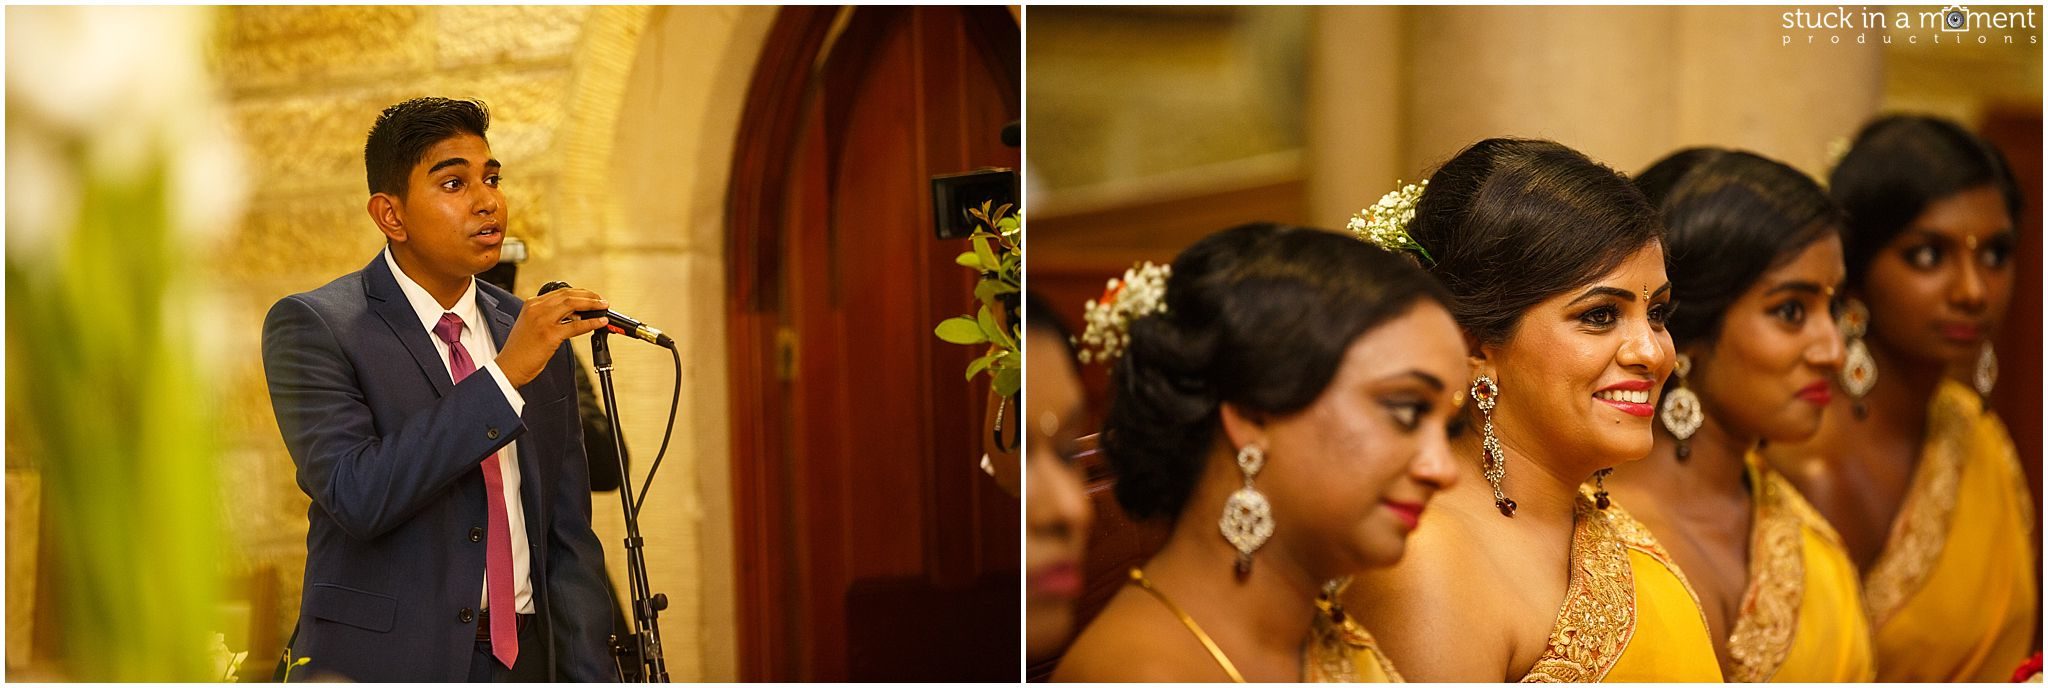 sydney sri lankan wedding photo video castle grand